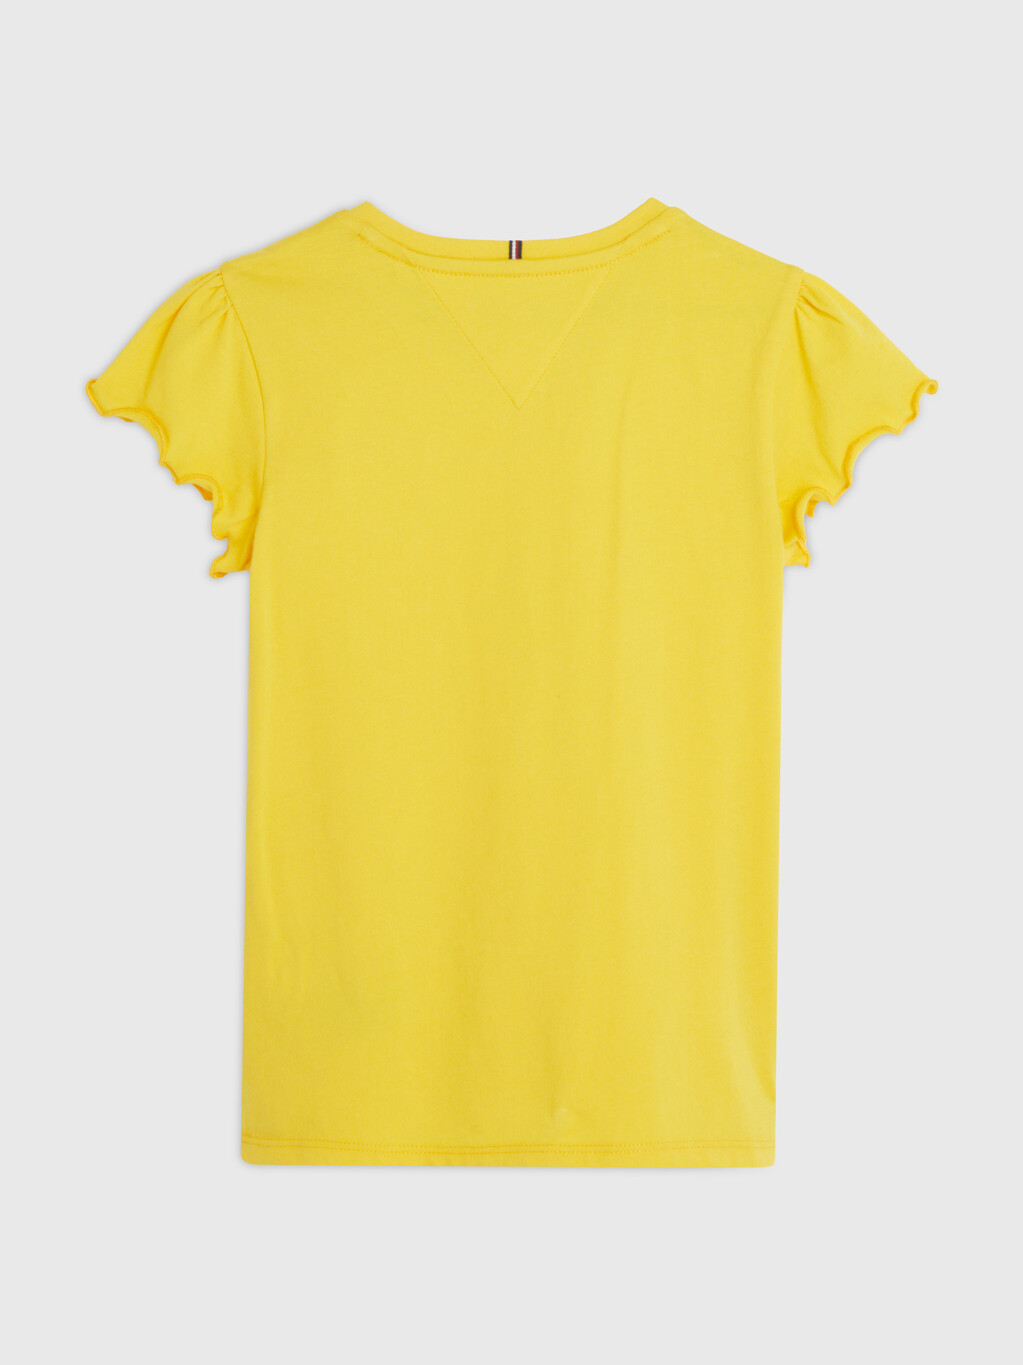 Essential 荷葉邊袖 T 恤, Star Fruit Yellow, hi-res